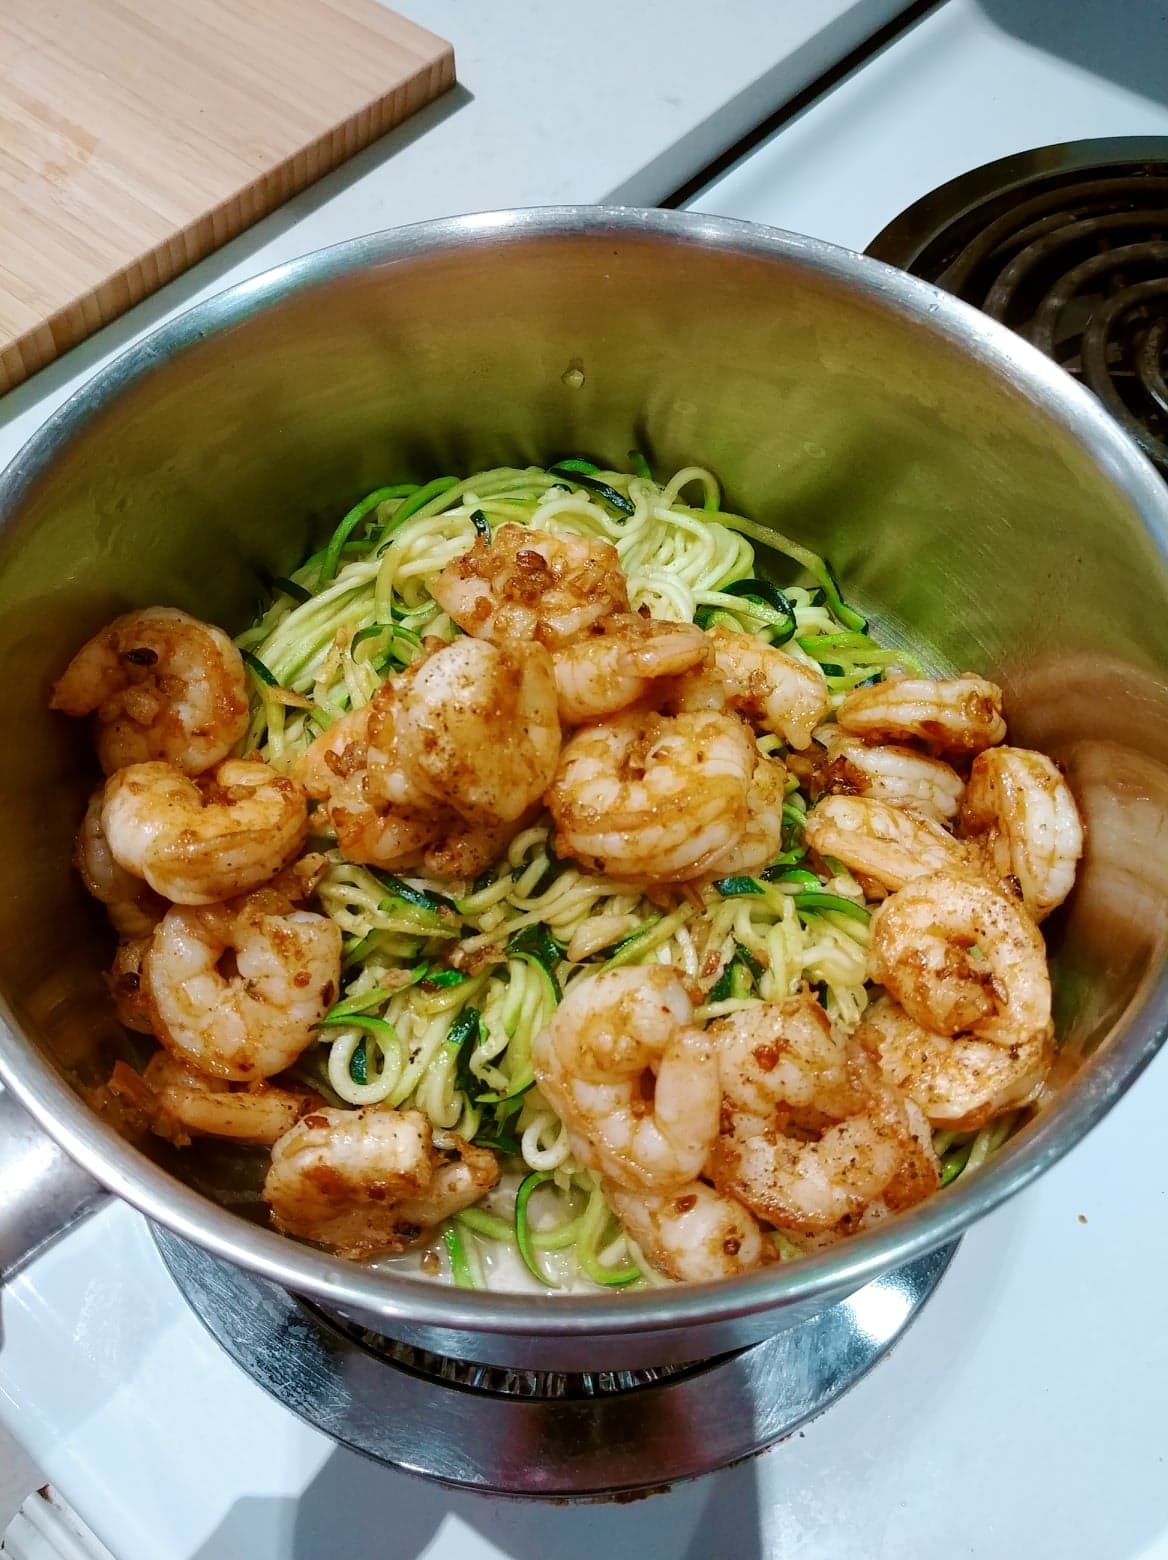 Pesto zucchini noodles with cajun seasoned shrimp